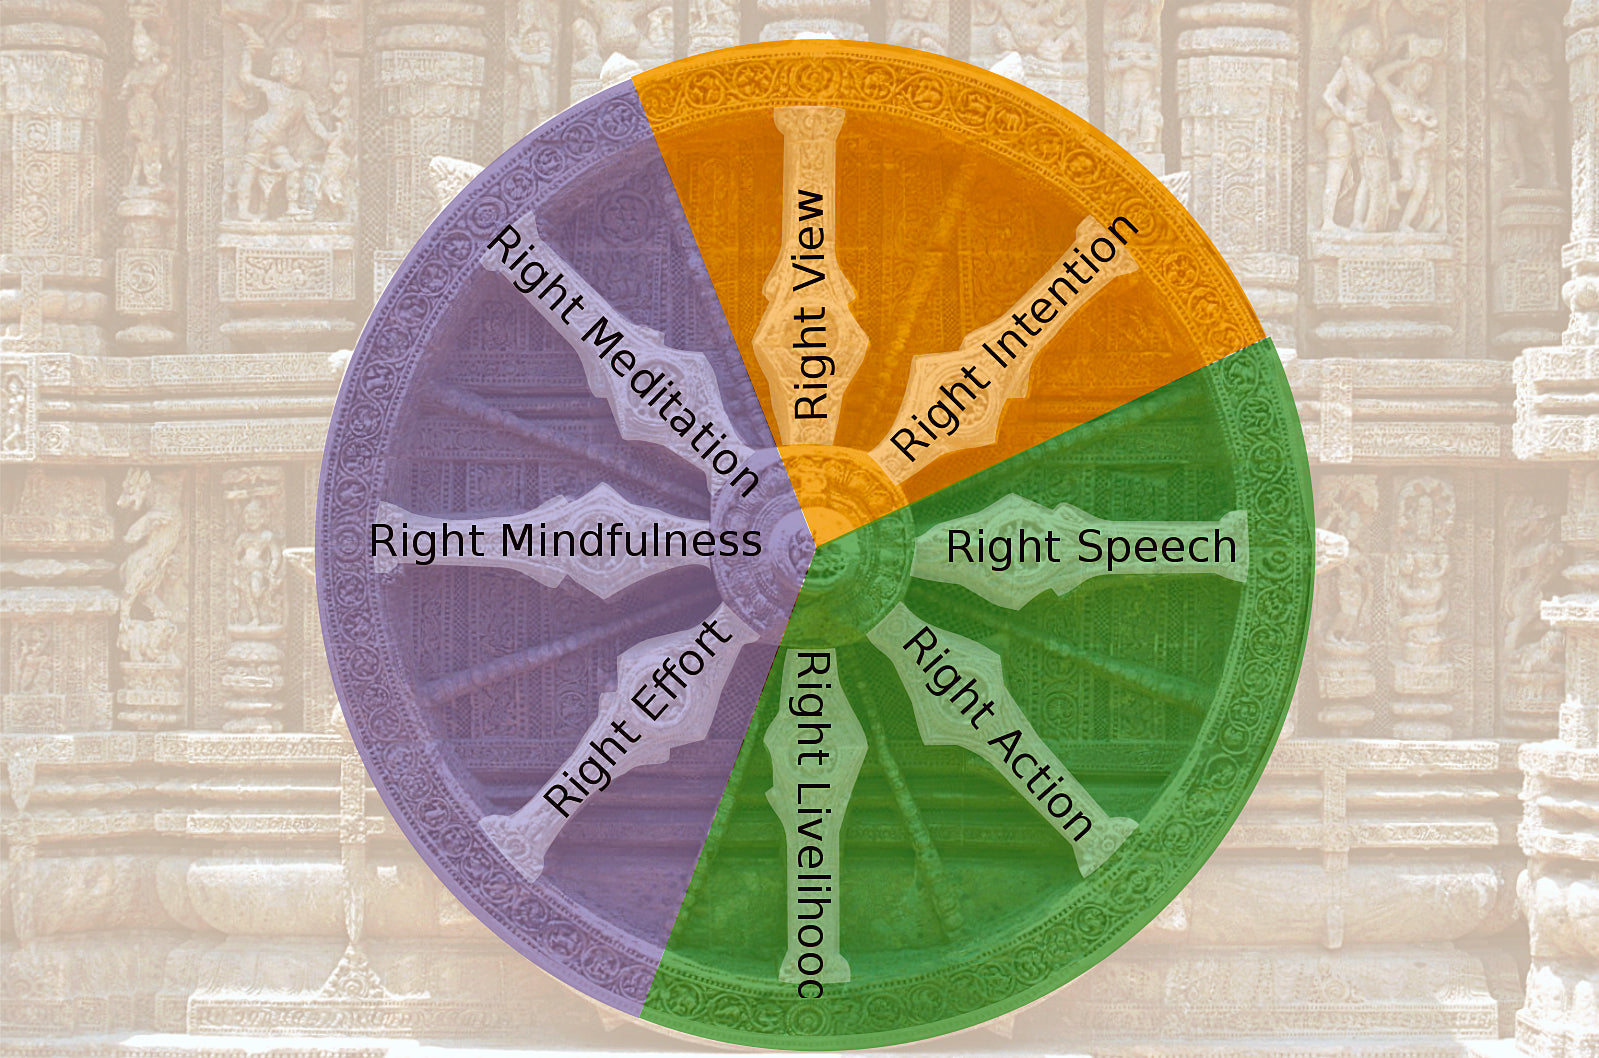 Dharmachakra, Wheel of Buddhist Teachings, courtesy Wikimedia